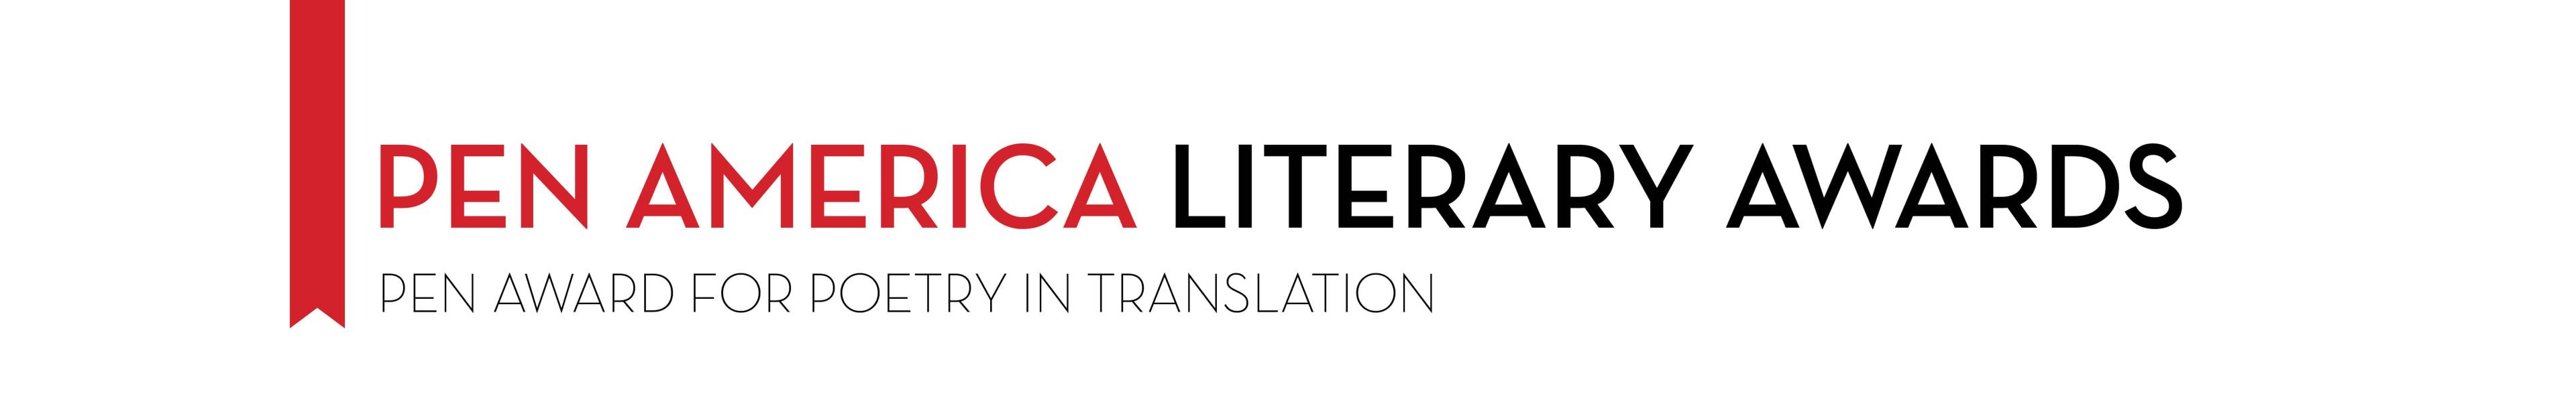 PEN America Literary Awards Poetry in Translation